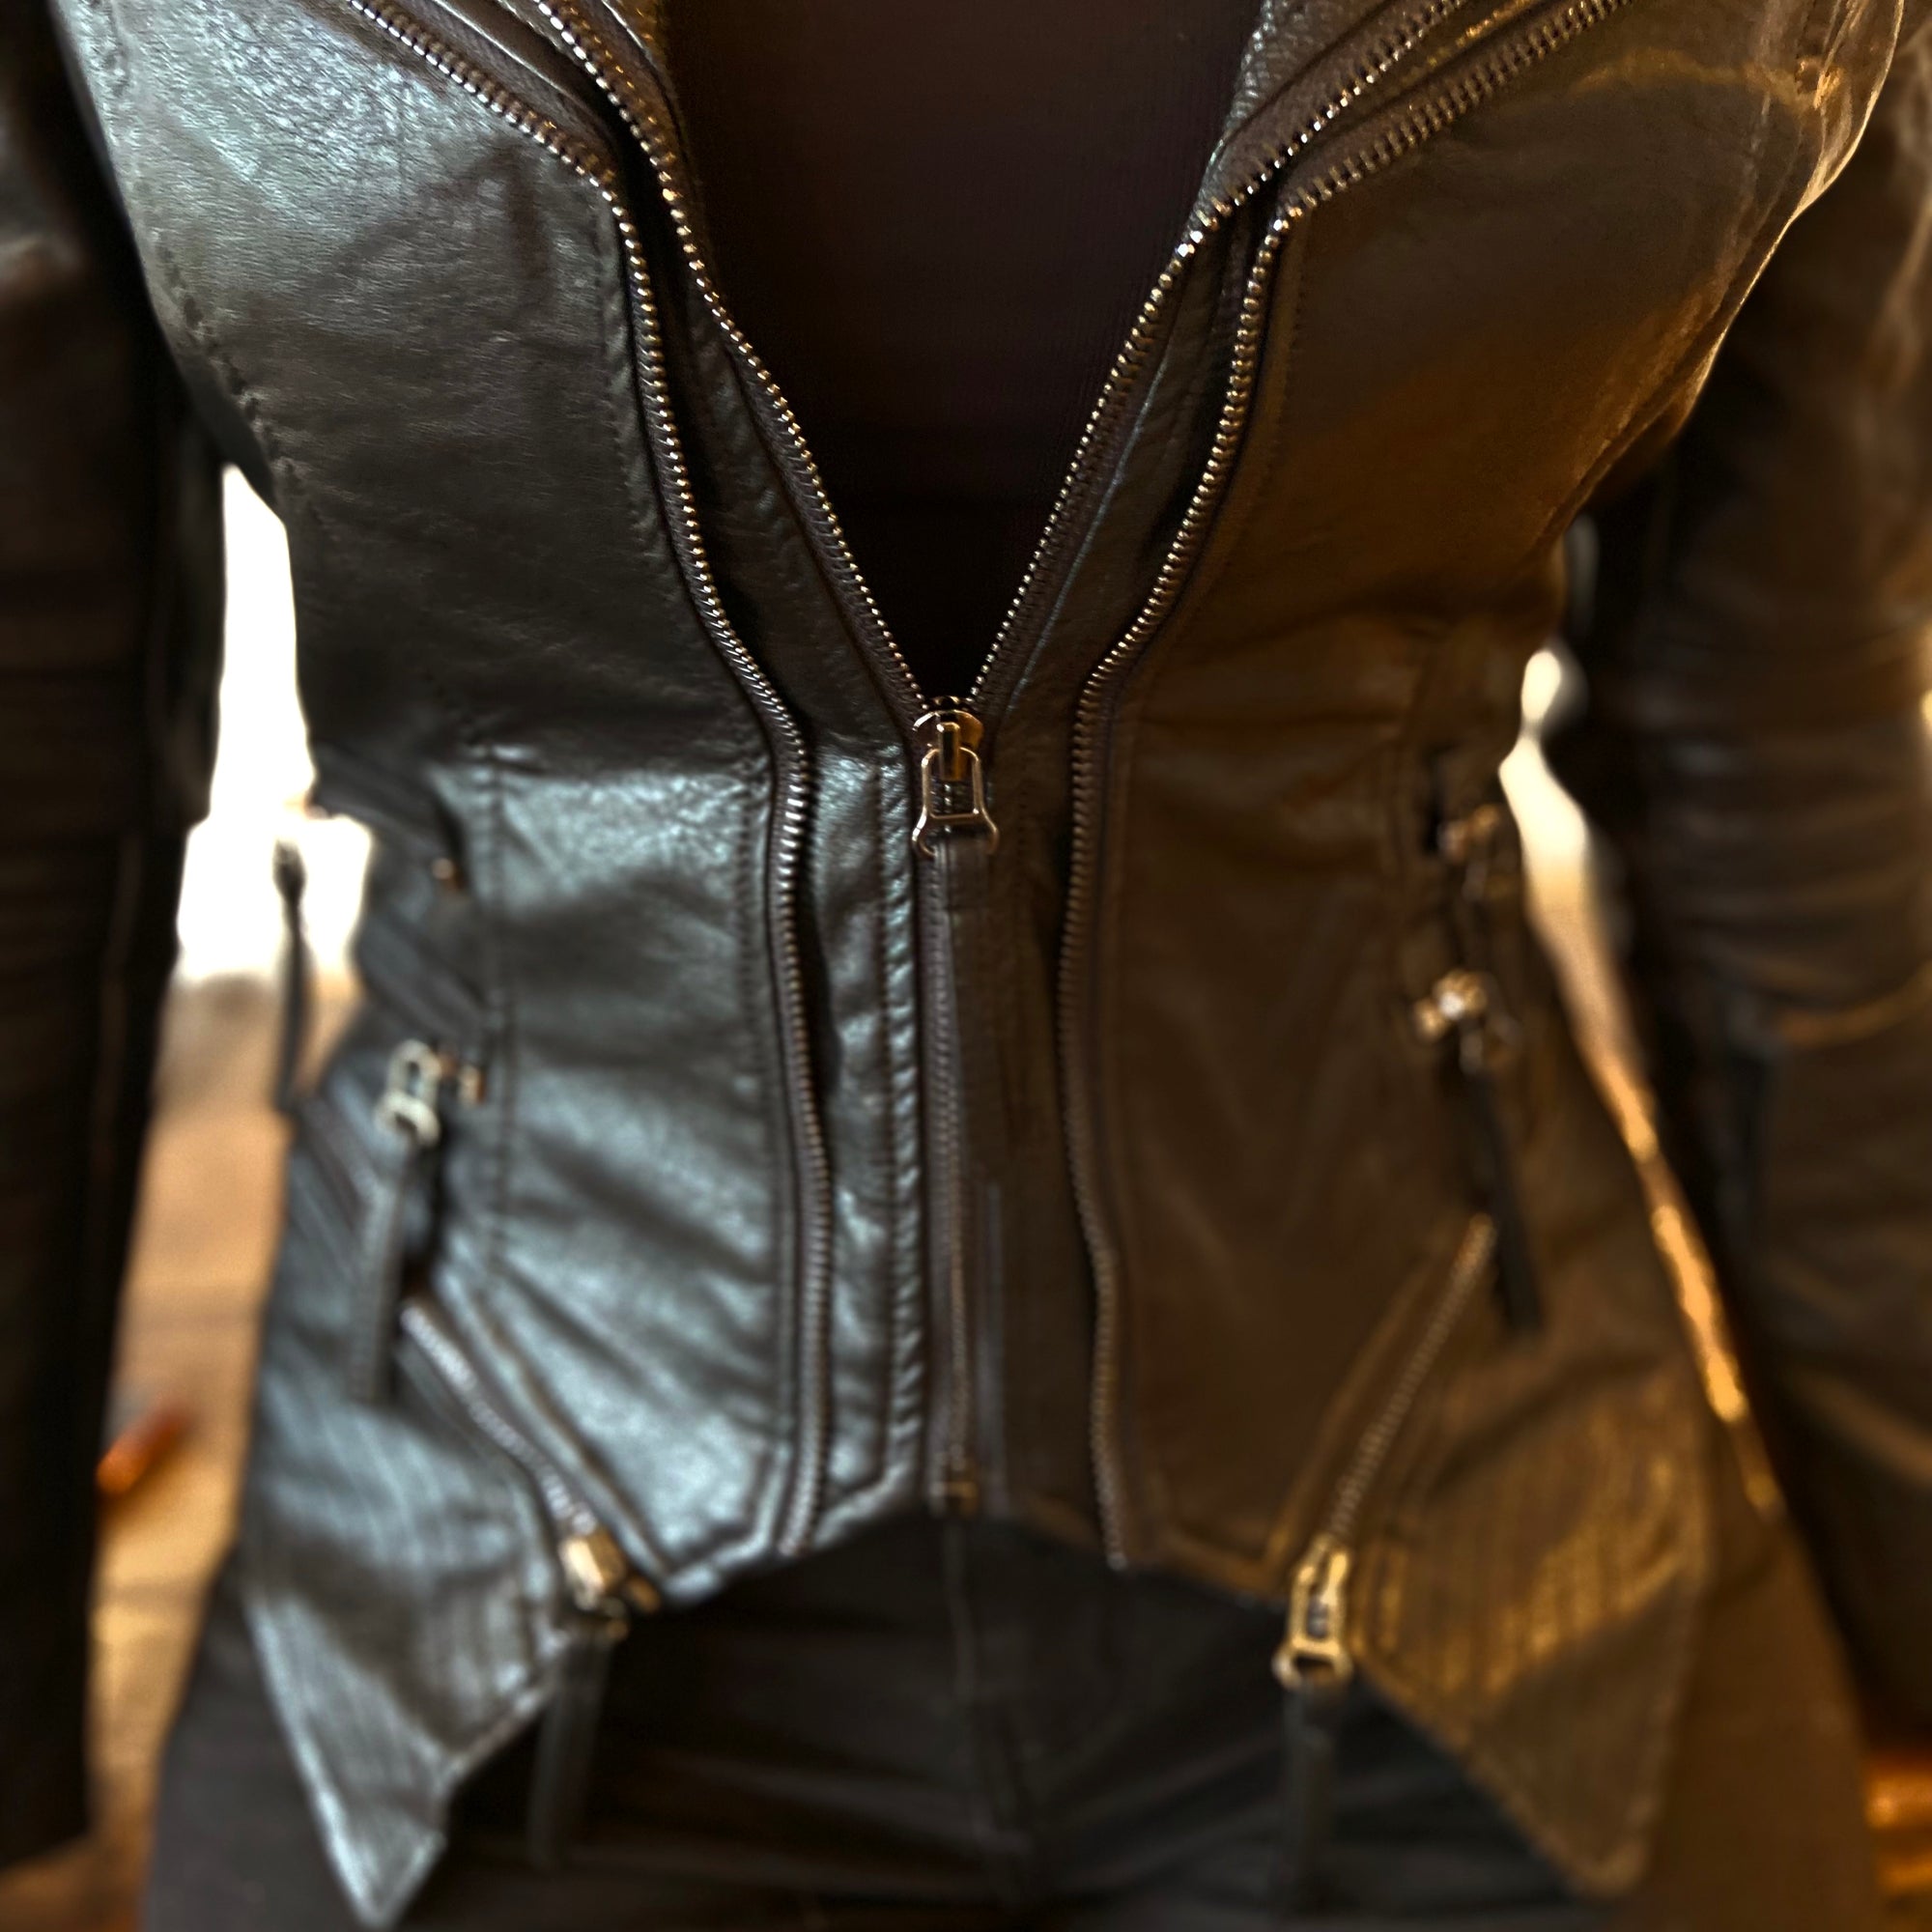 Anne leather jacket